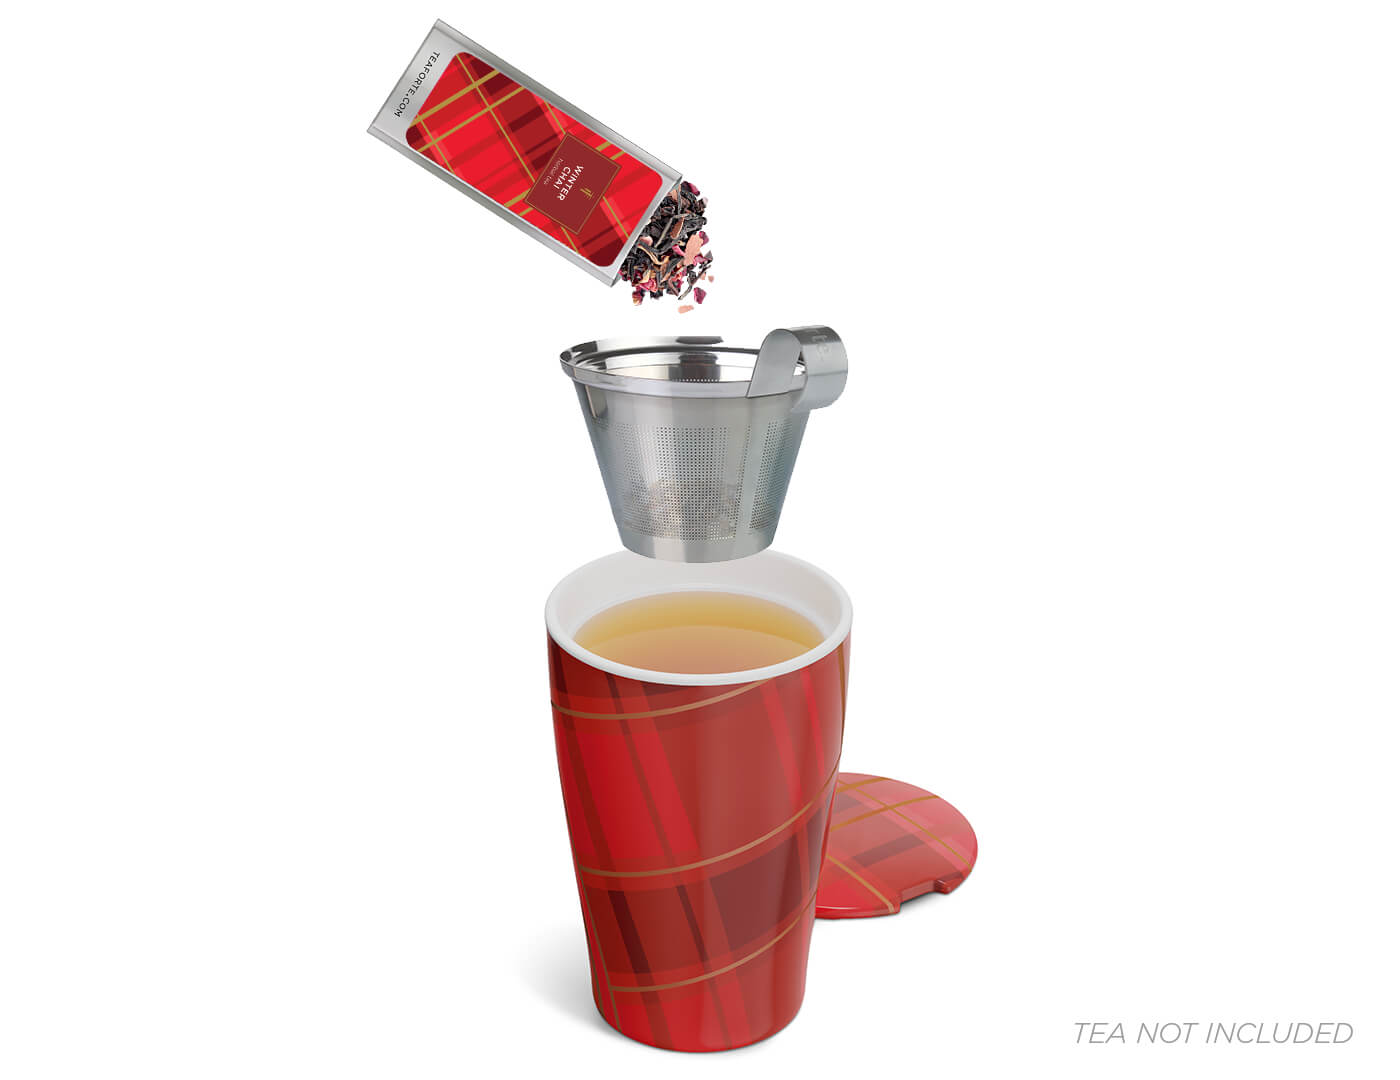 Warming Joy KATI Steeping Cup being used to steep tea